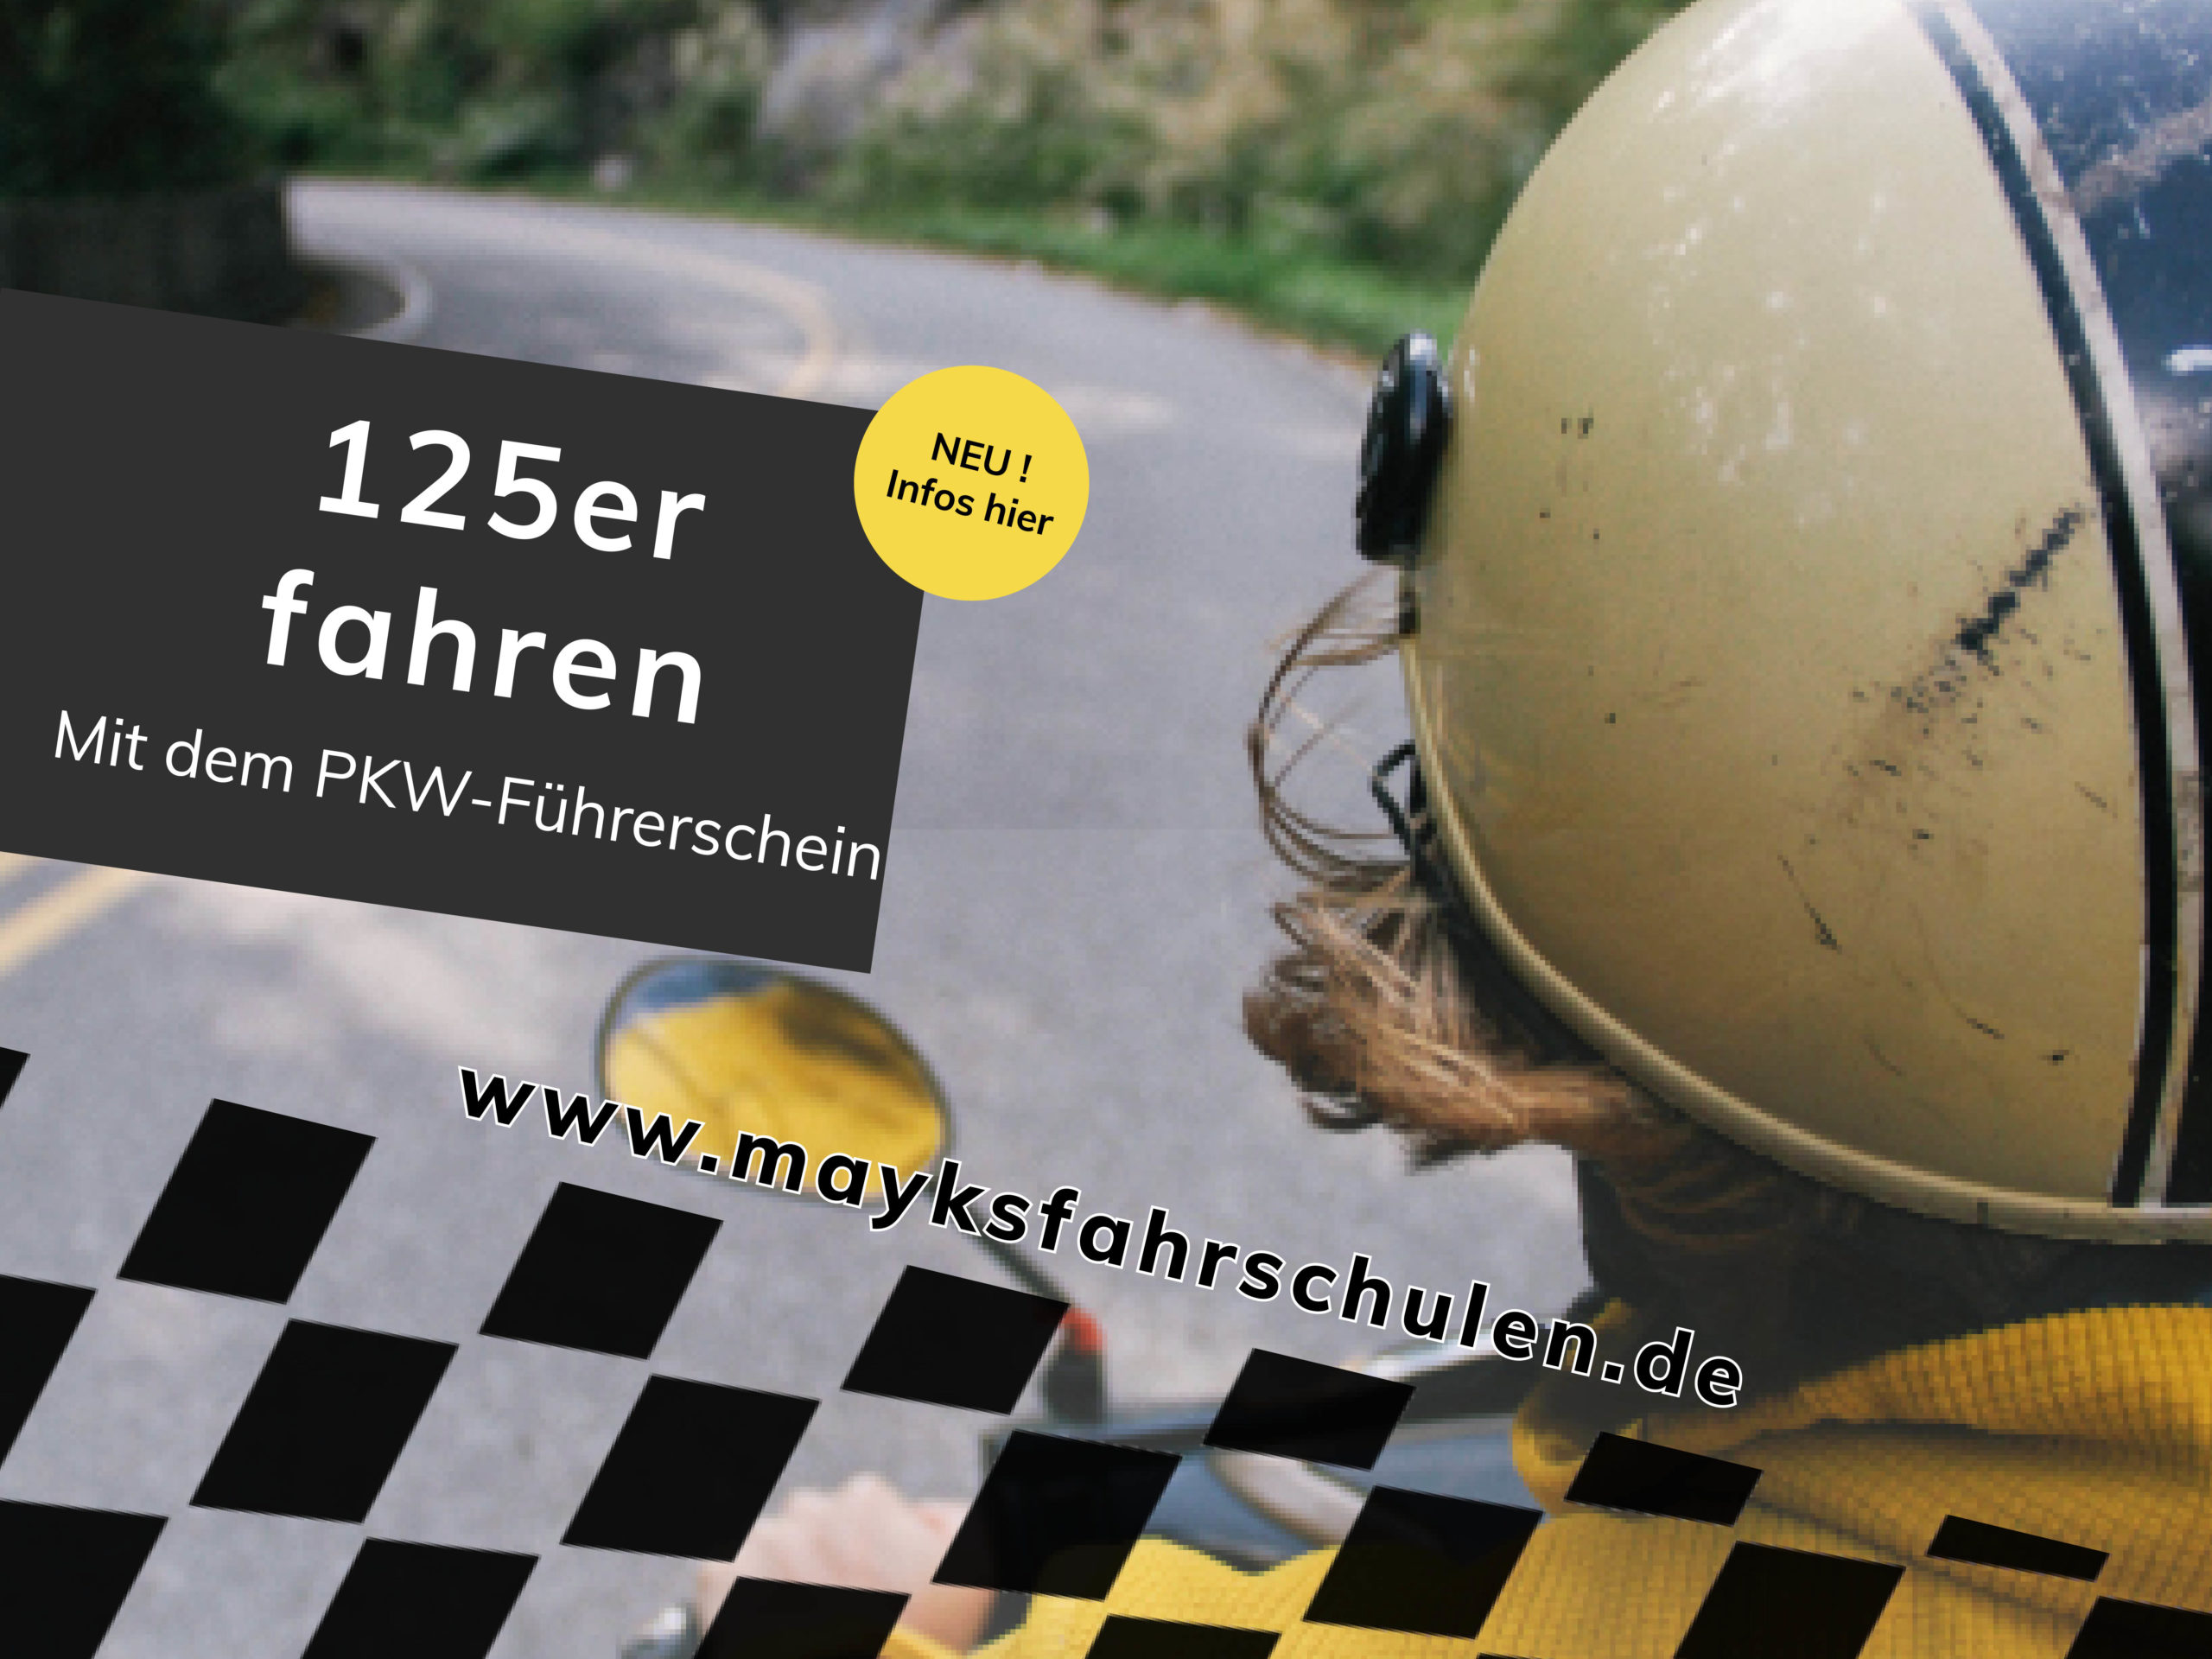 Mike's Fahrschule – Fahrschule Neubiberg, Auto Kfz Führerschein Motorrad  Mofa 125er Führerschein